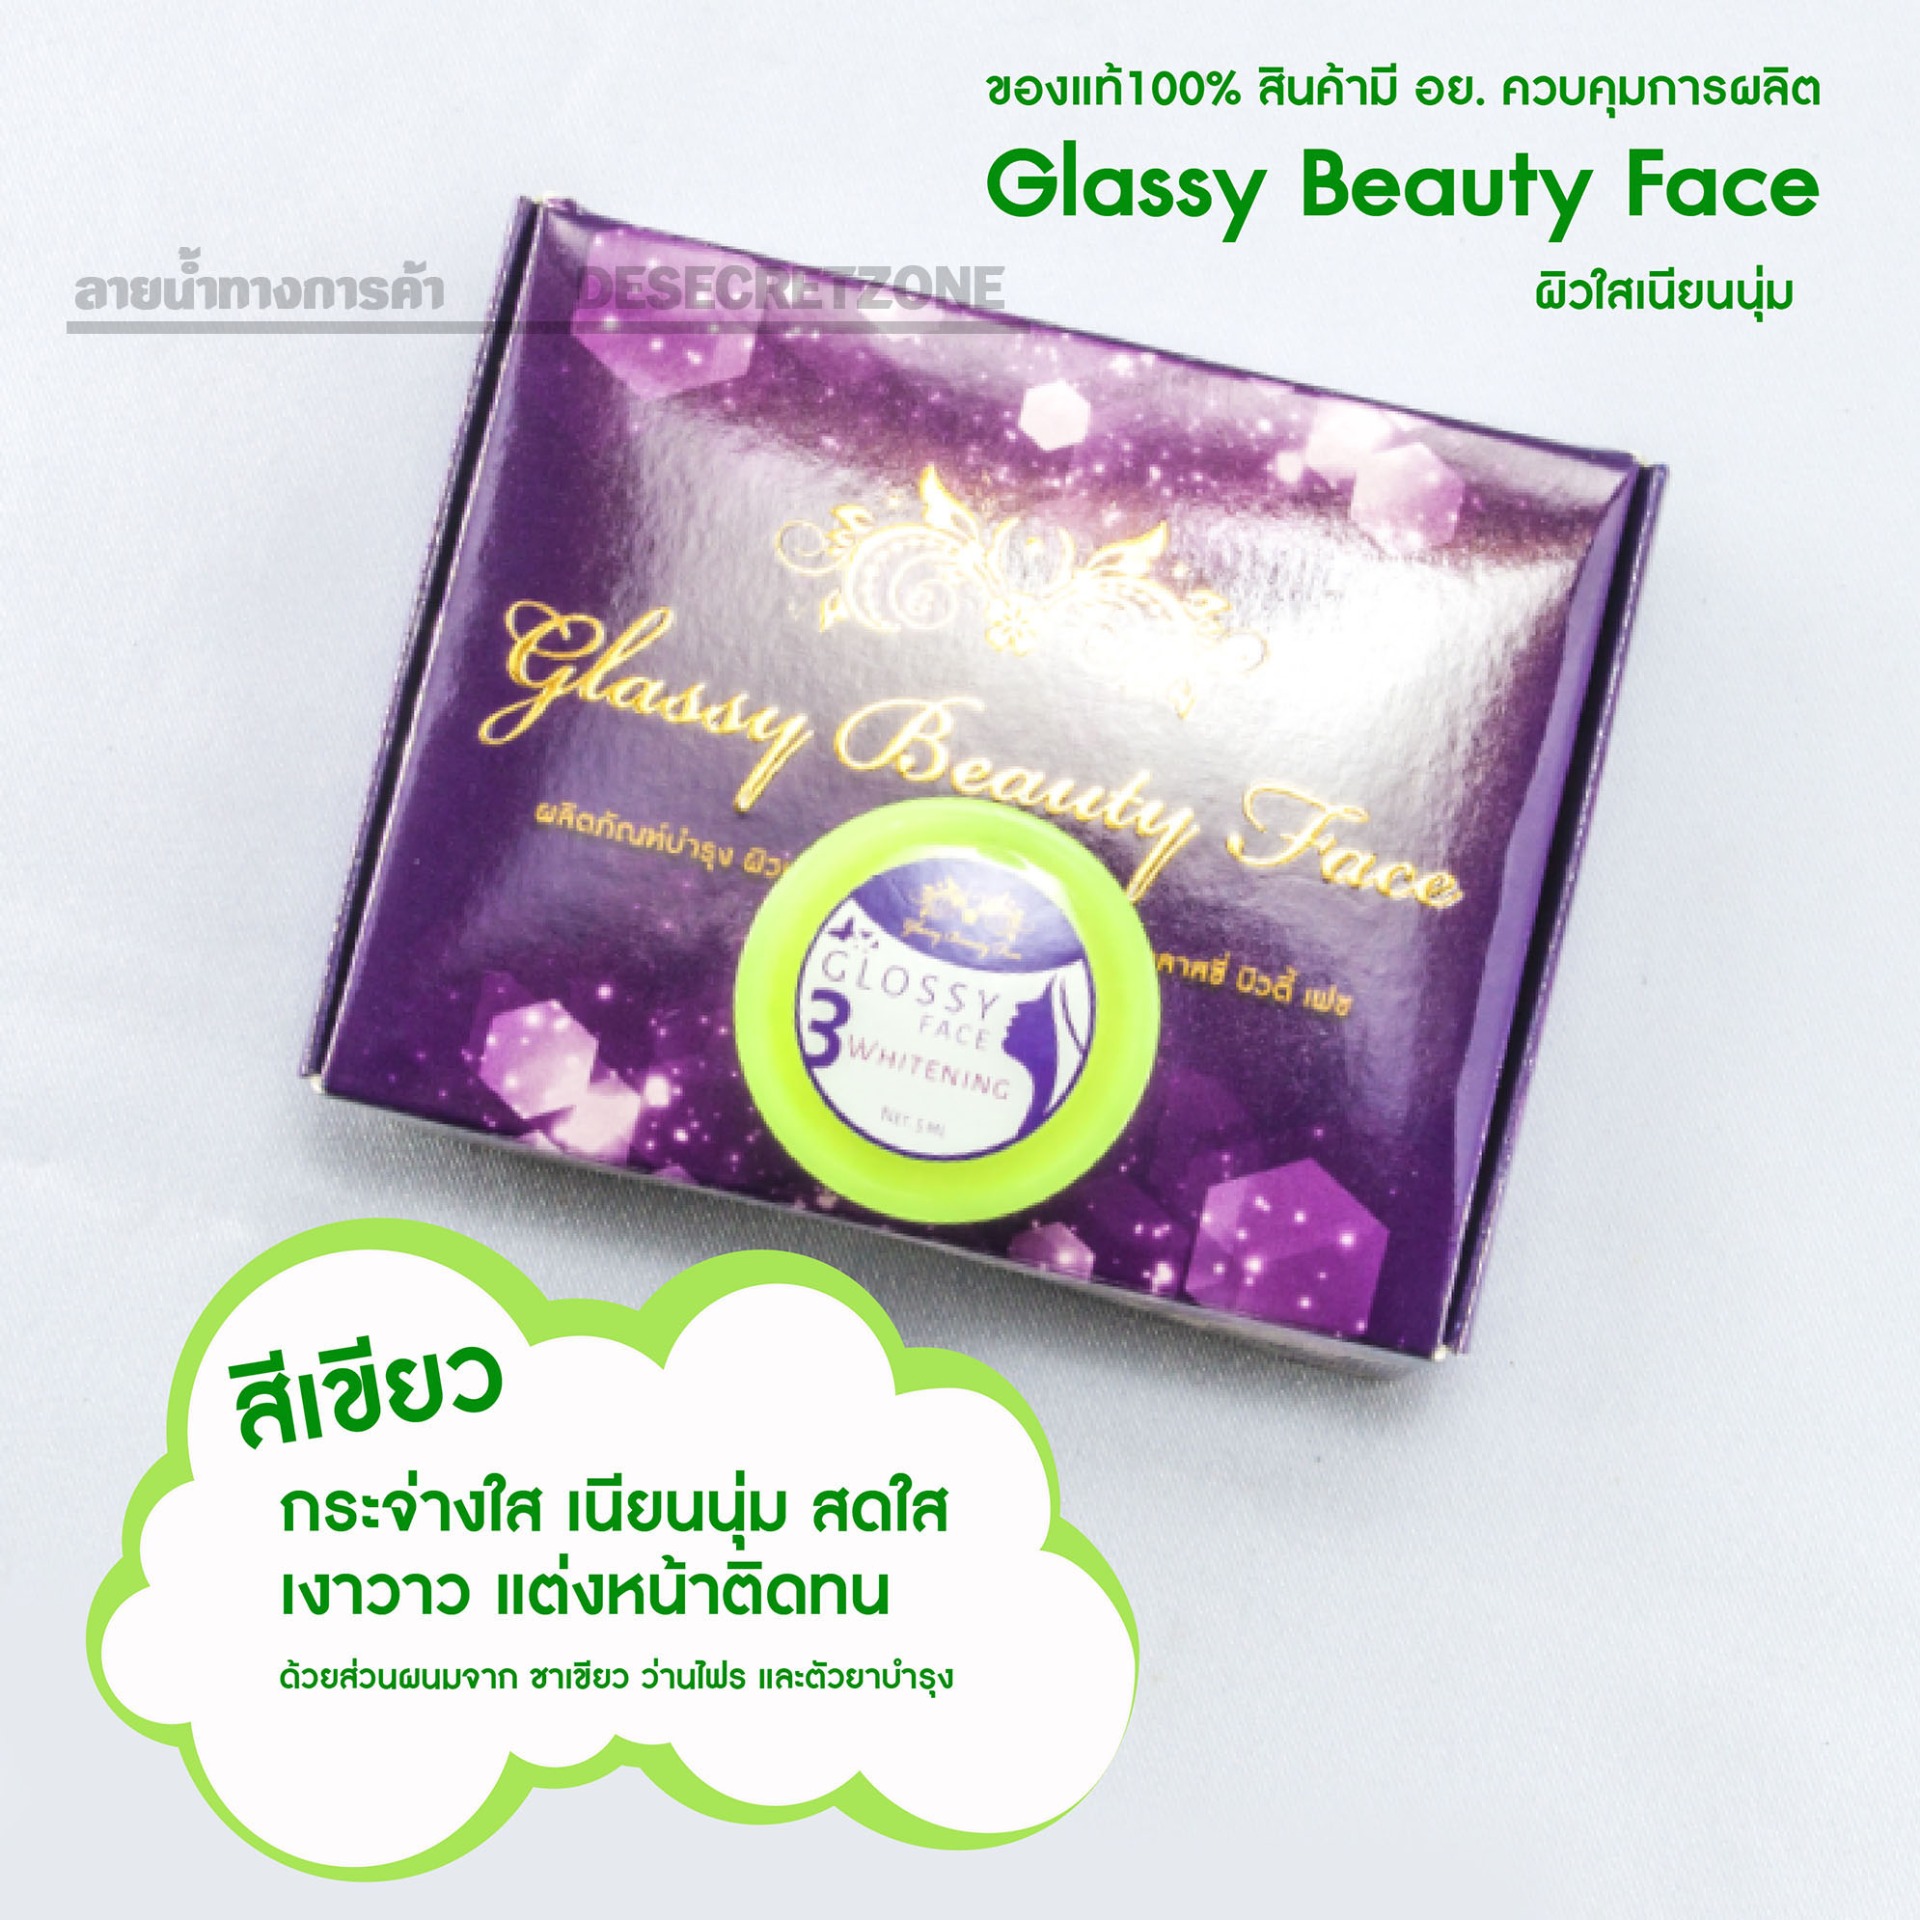 Glassy Beauty Face สีเขียวตัวเด็ด สำหรับหน้าใสต้องมาตำตัวนี้ไปใช้ 1กระปุก ใช้ได้นาน 1-2 เดือน Glossy Face cream